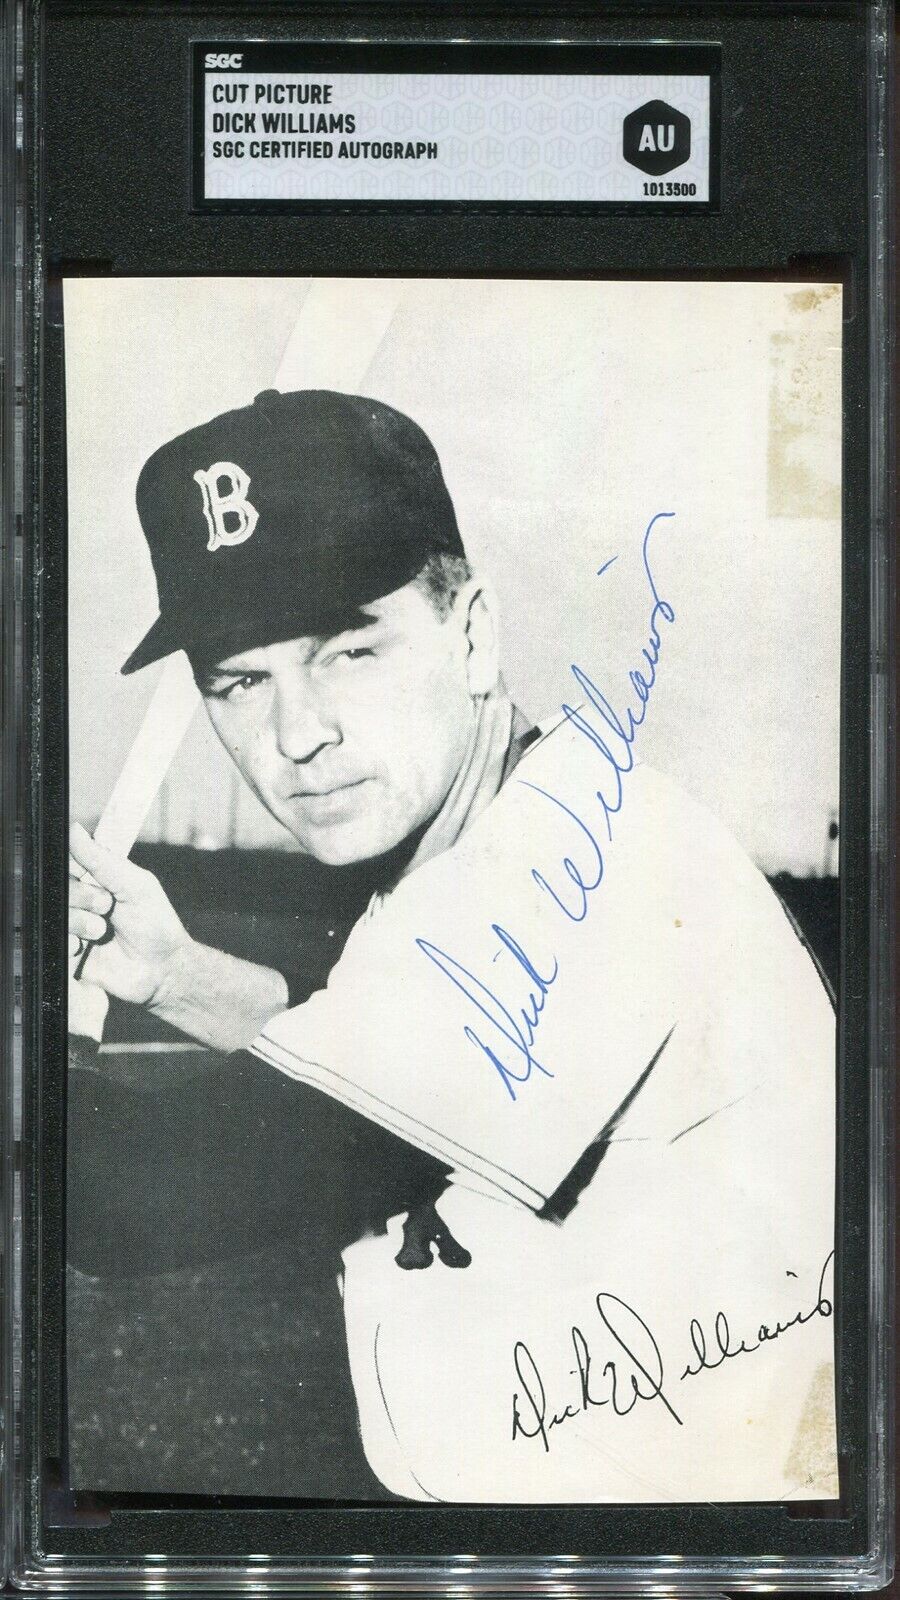 Postcard-Size Cut Picture - Dick Williams Red Sox - SGC Autograph #1013500